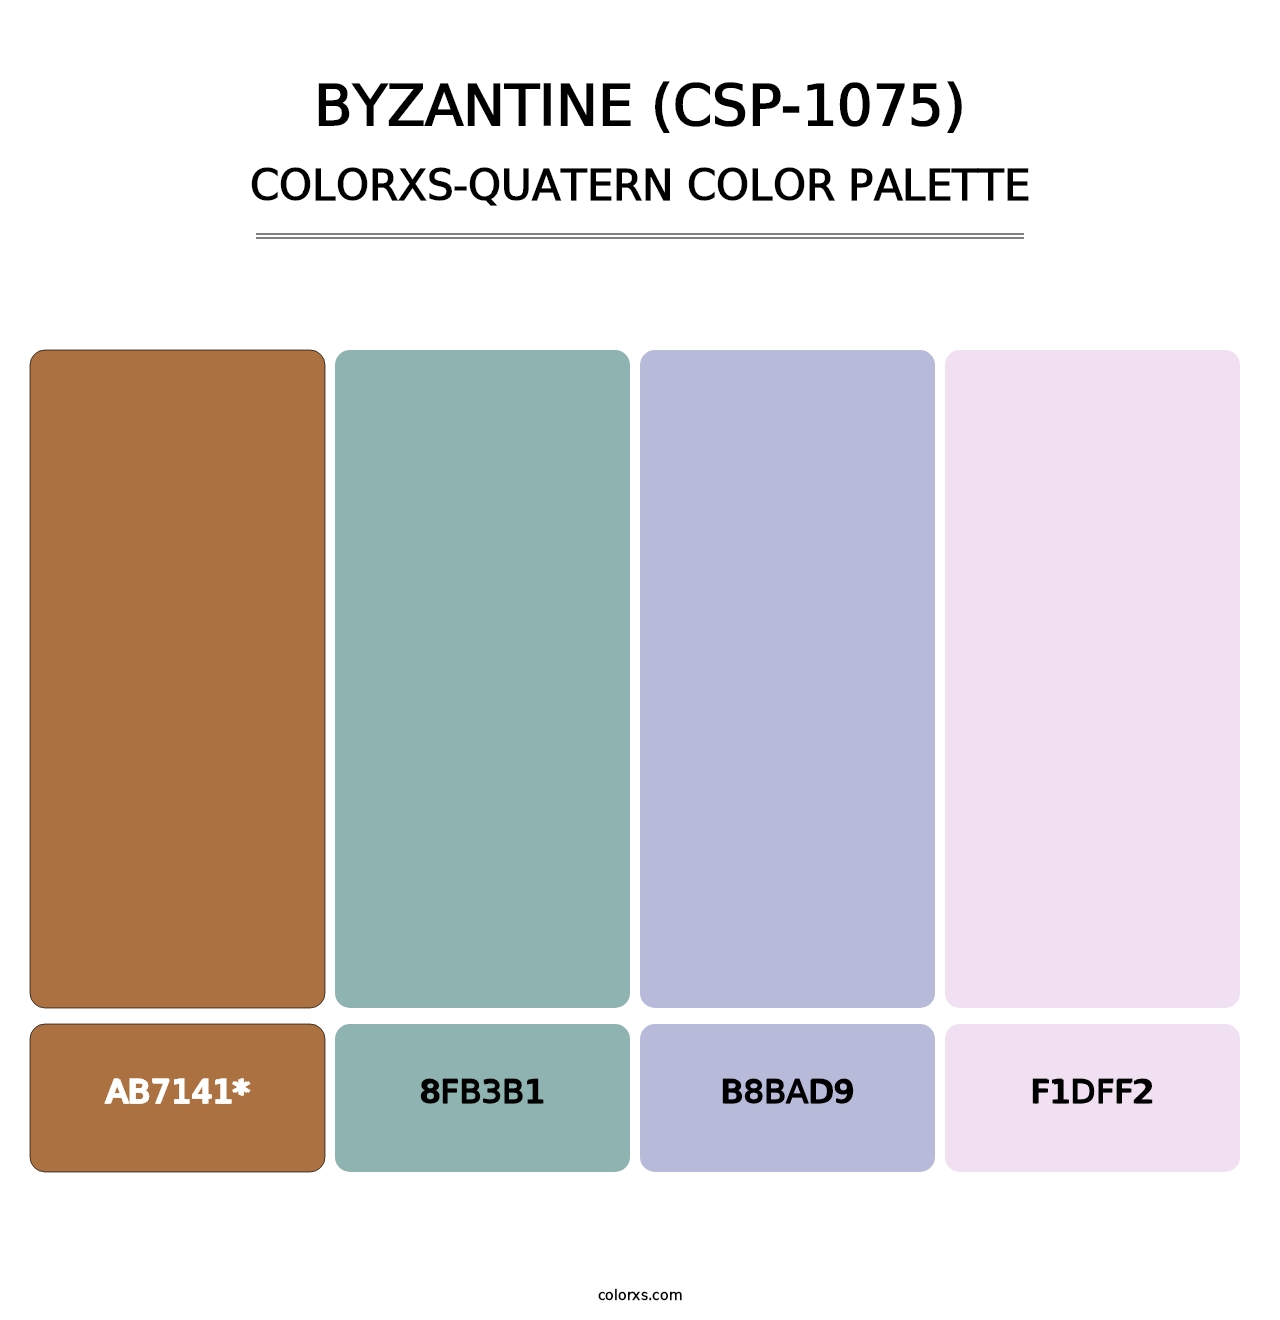 Byzantine (CSP-1075) - Colorxs Quatern Palette